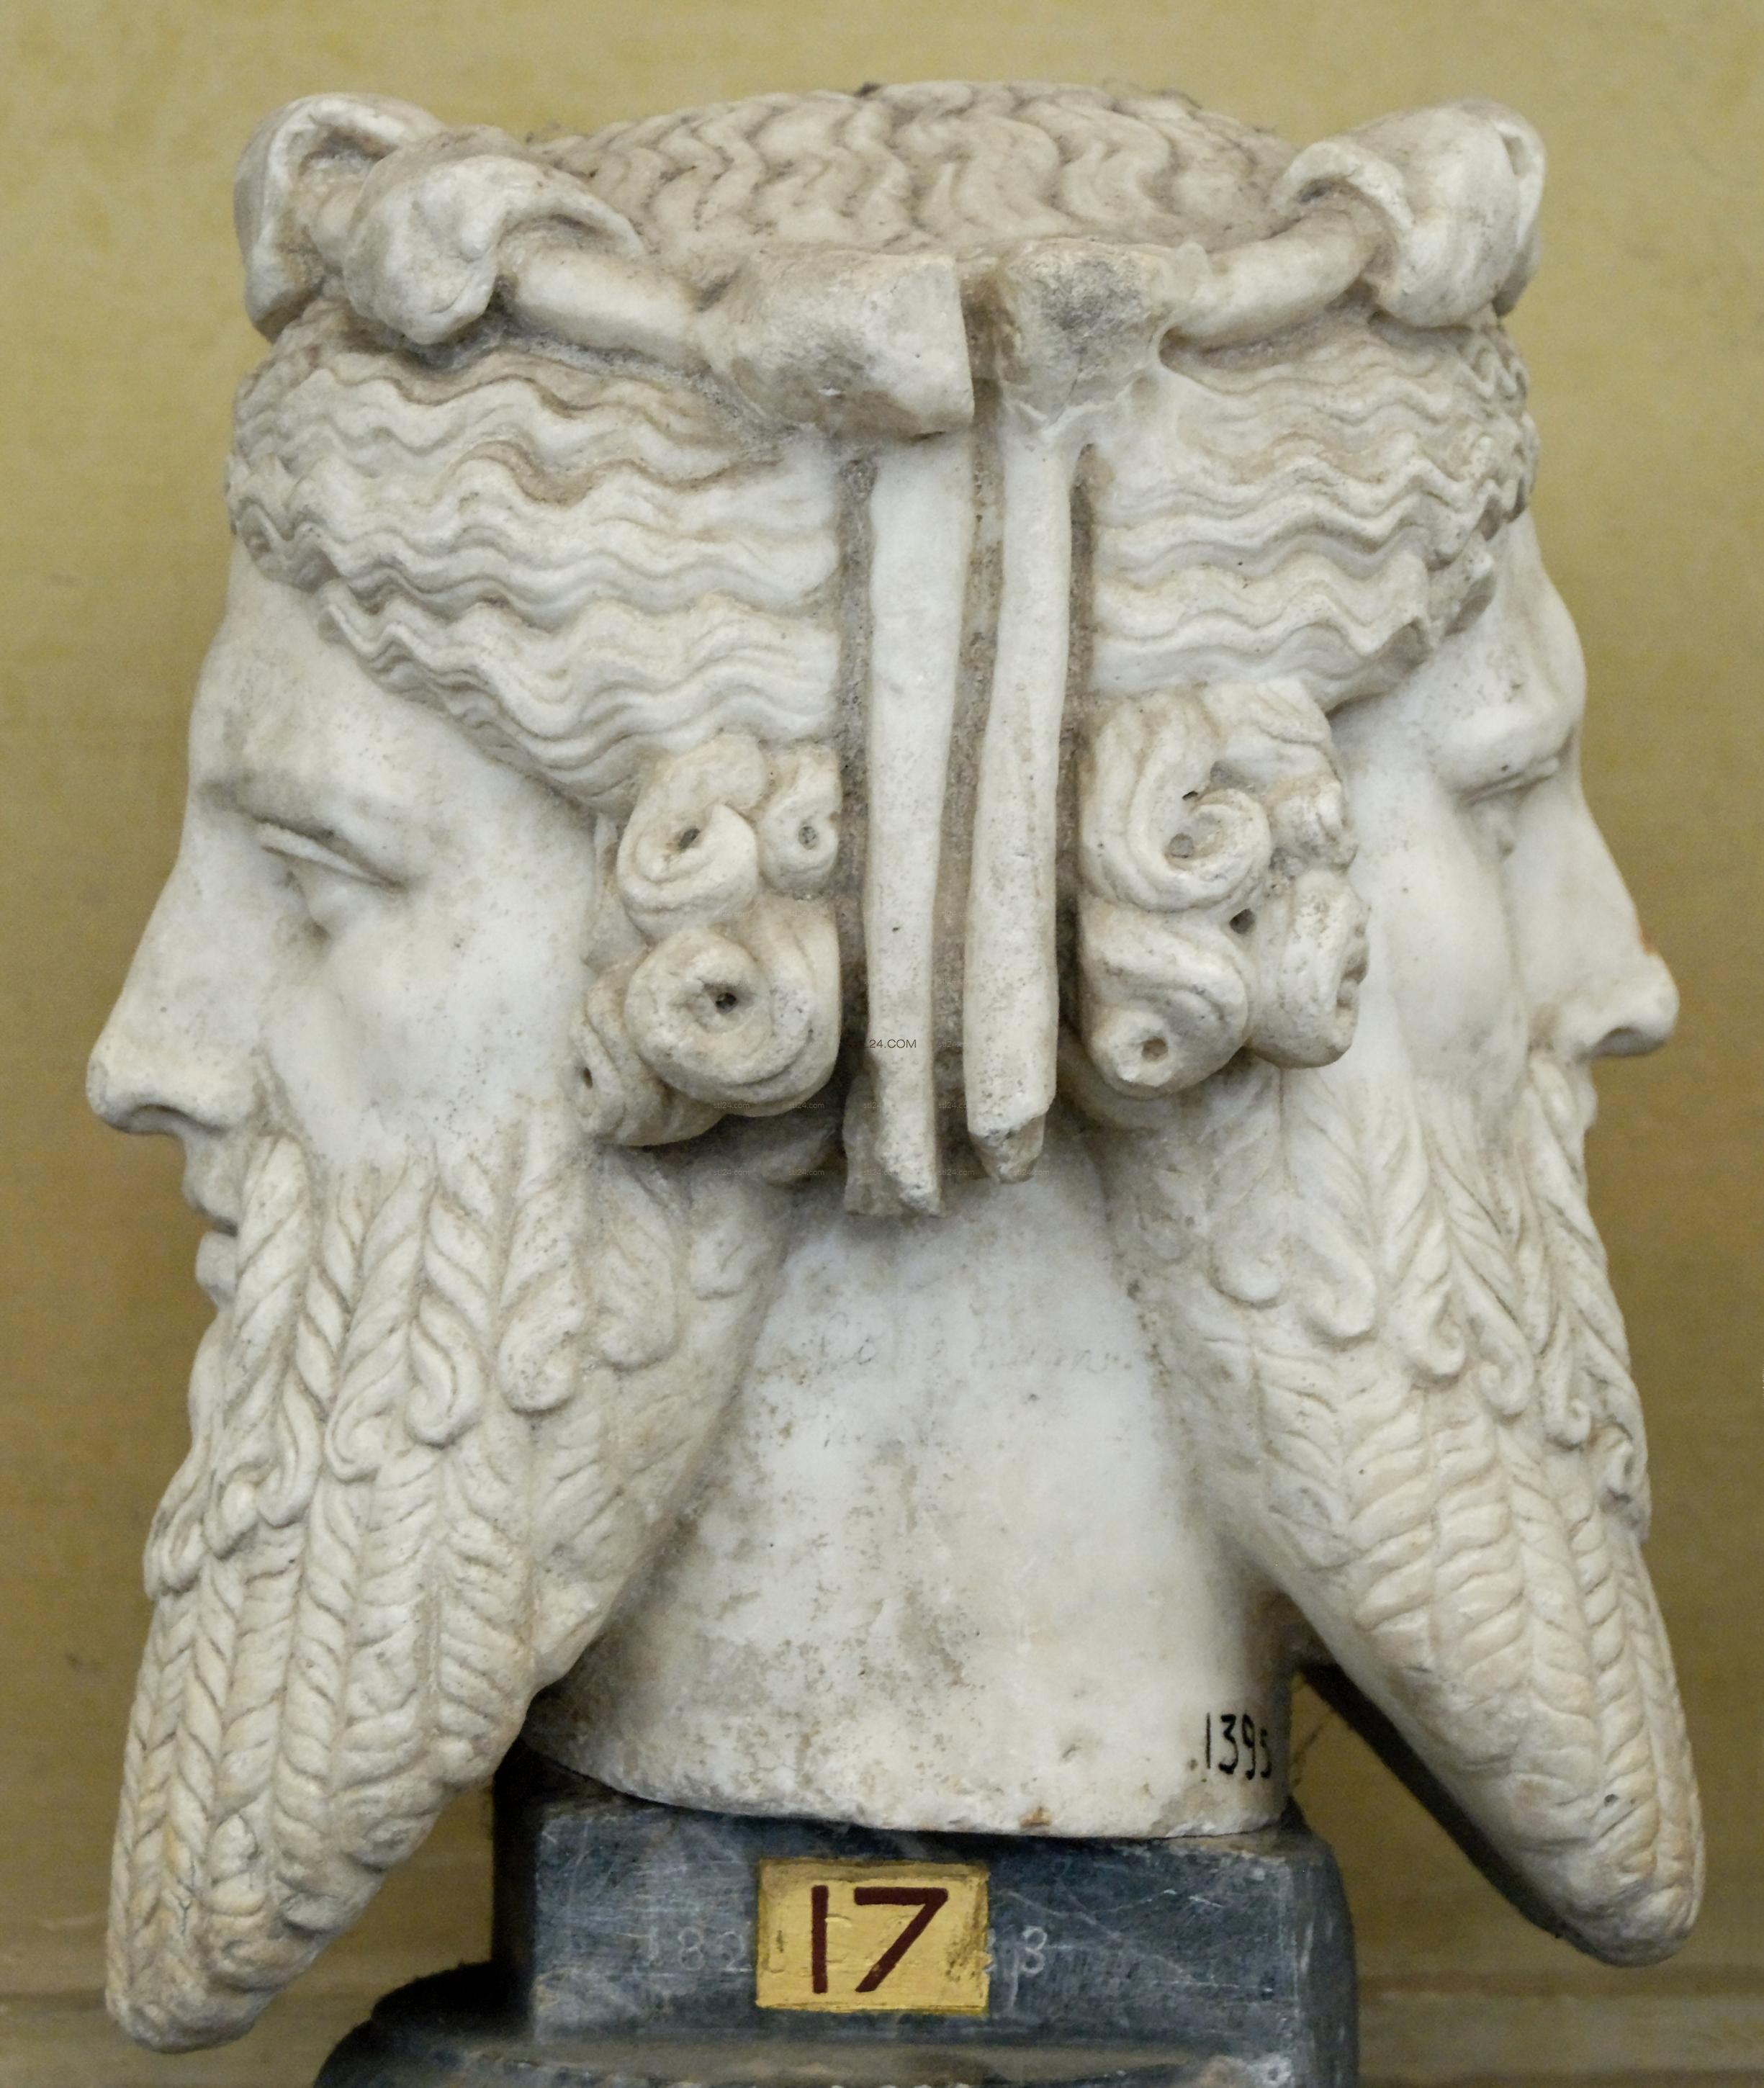 Янус бог древнего рима